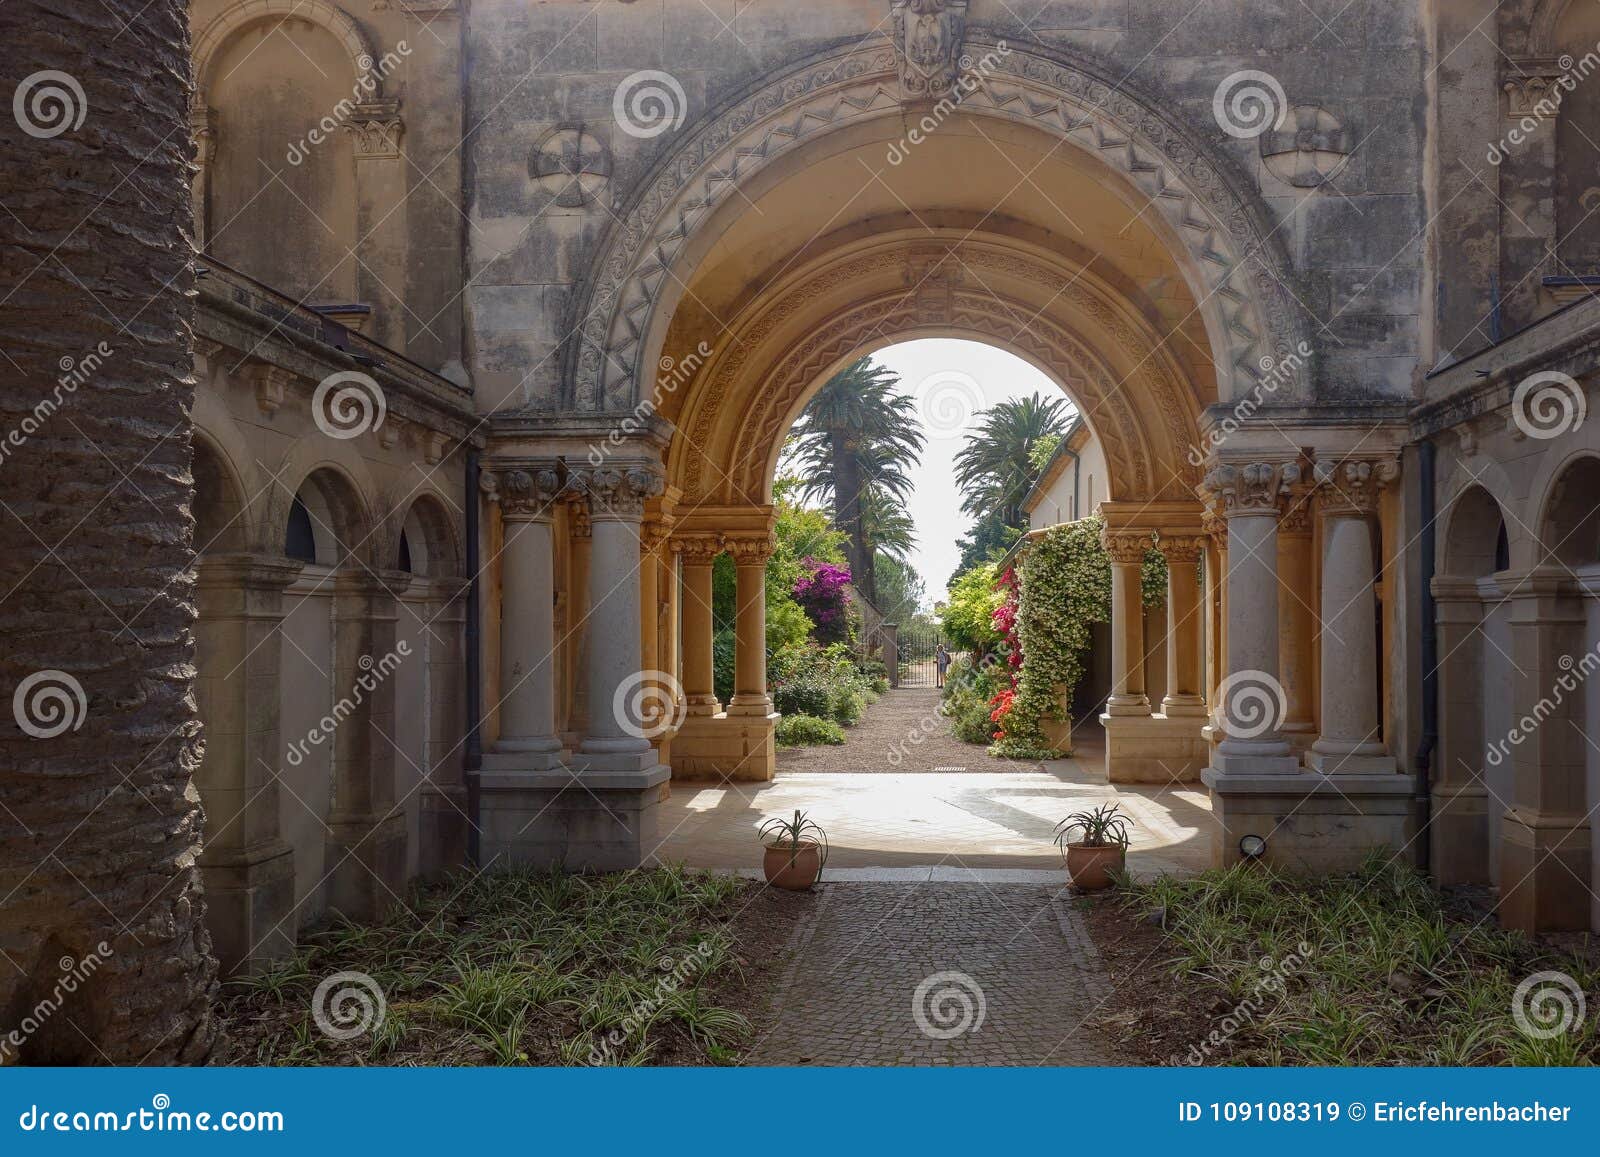 saint honorat archway near cannes france